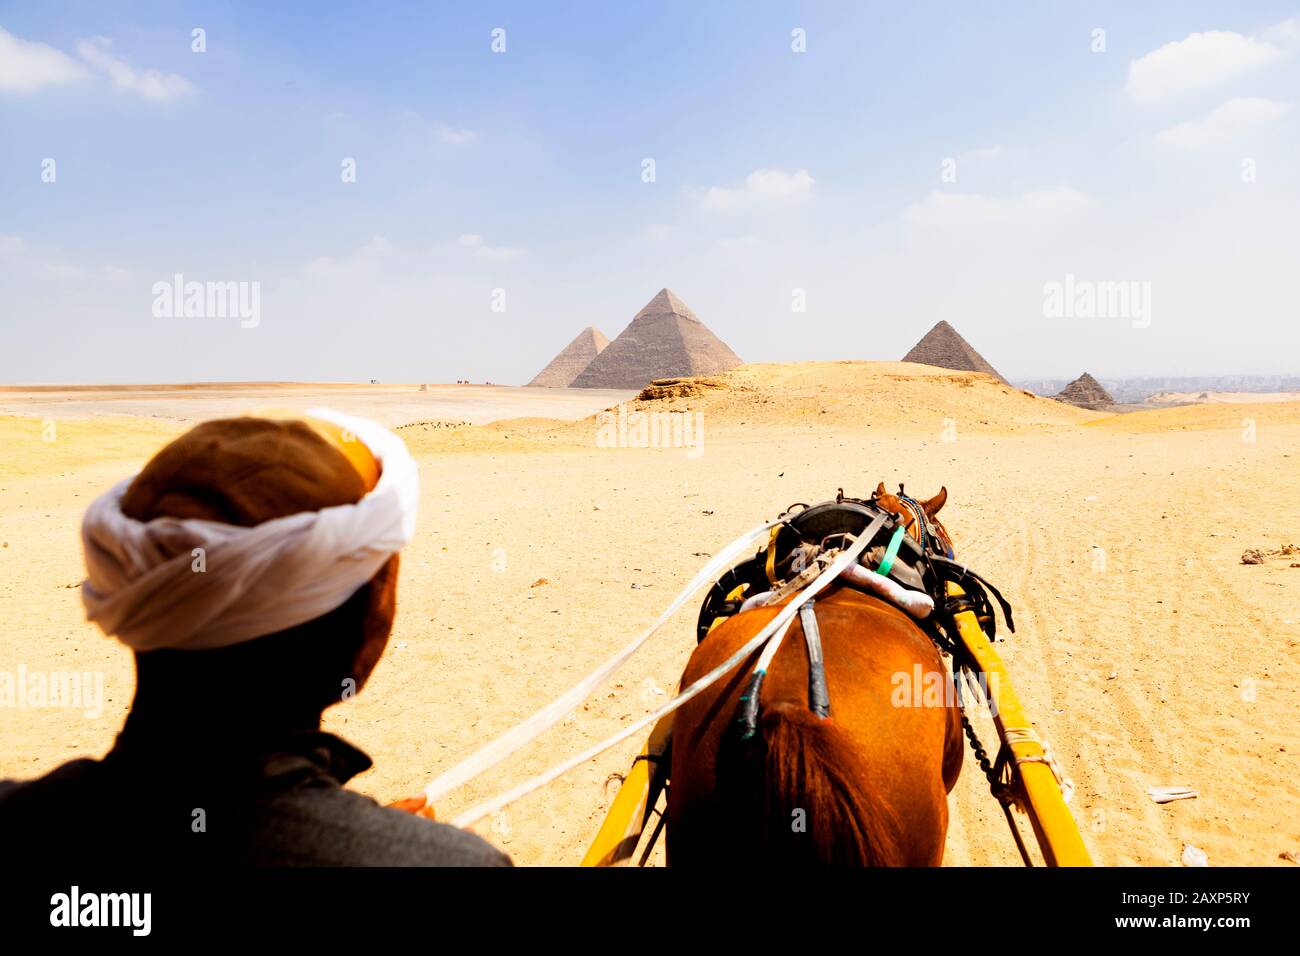 Cairo, Giza, Egypt, Cairo, Giza, Egypt, Pyramids of Giza Stock Photo